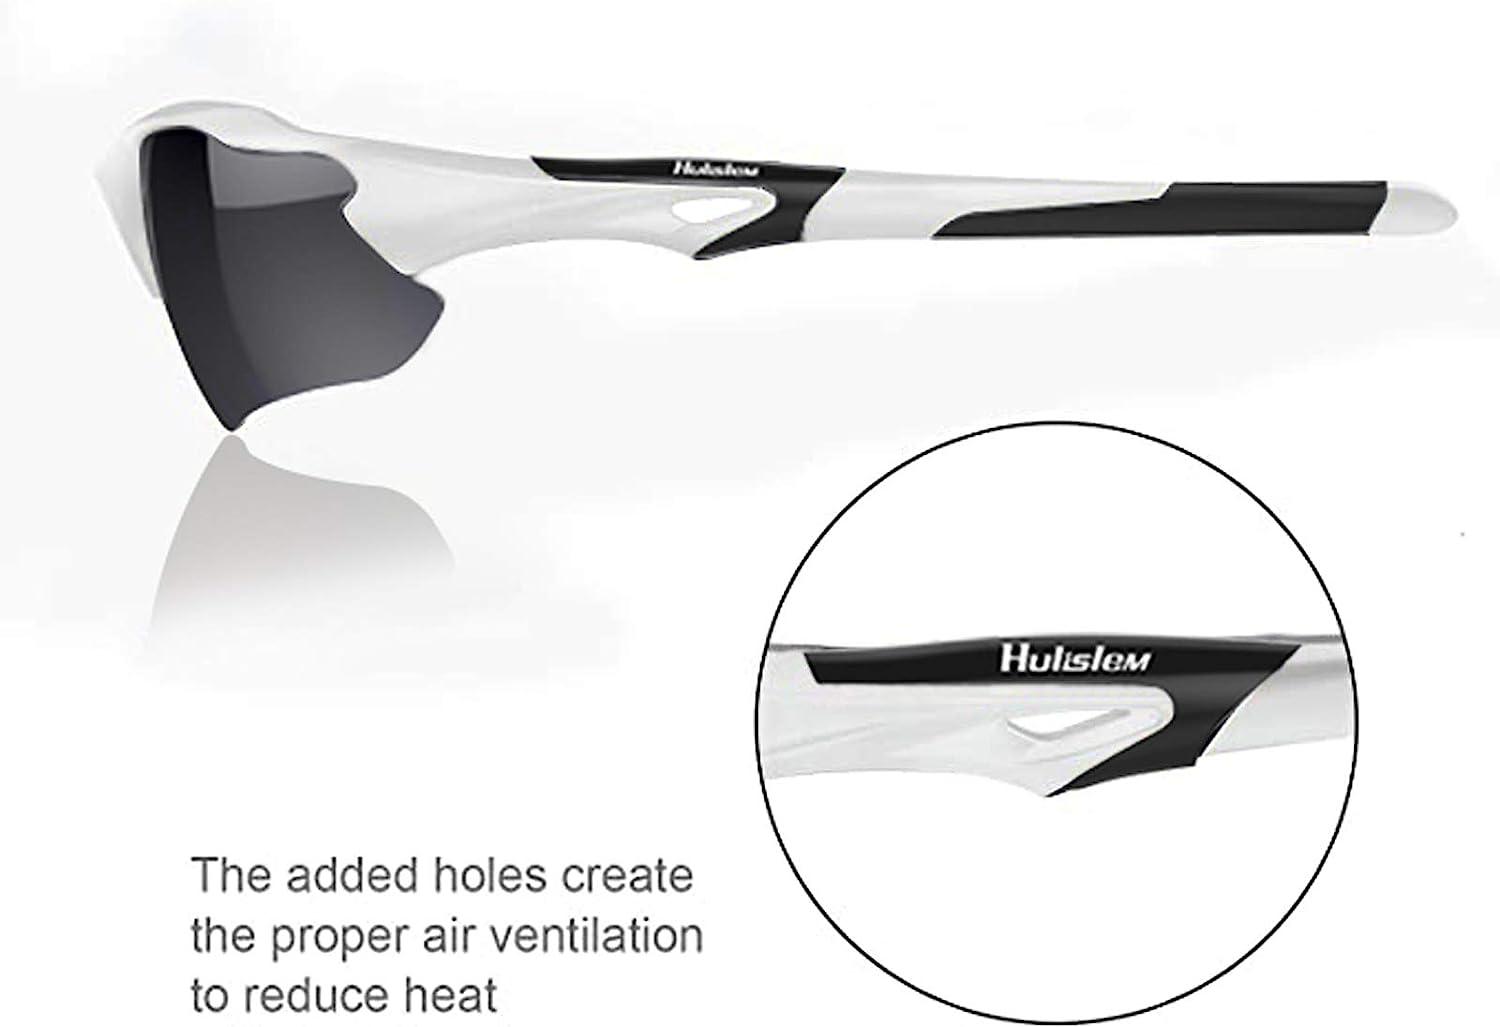  Hulislem Blade II Sport Polarized Sunglasses